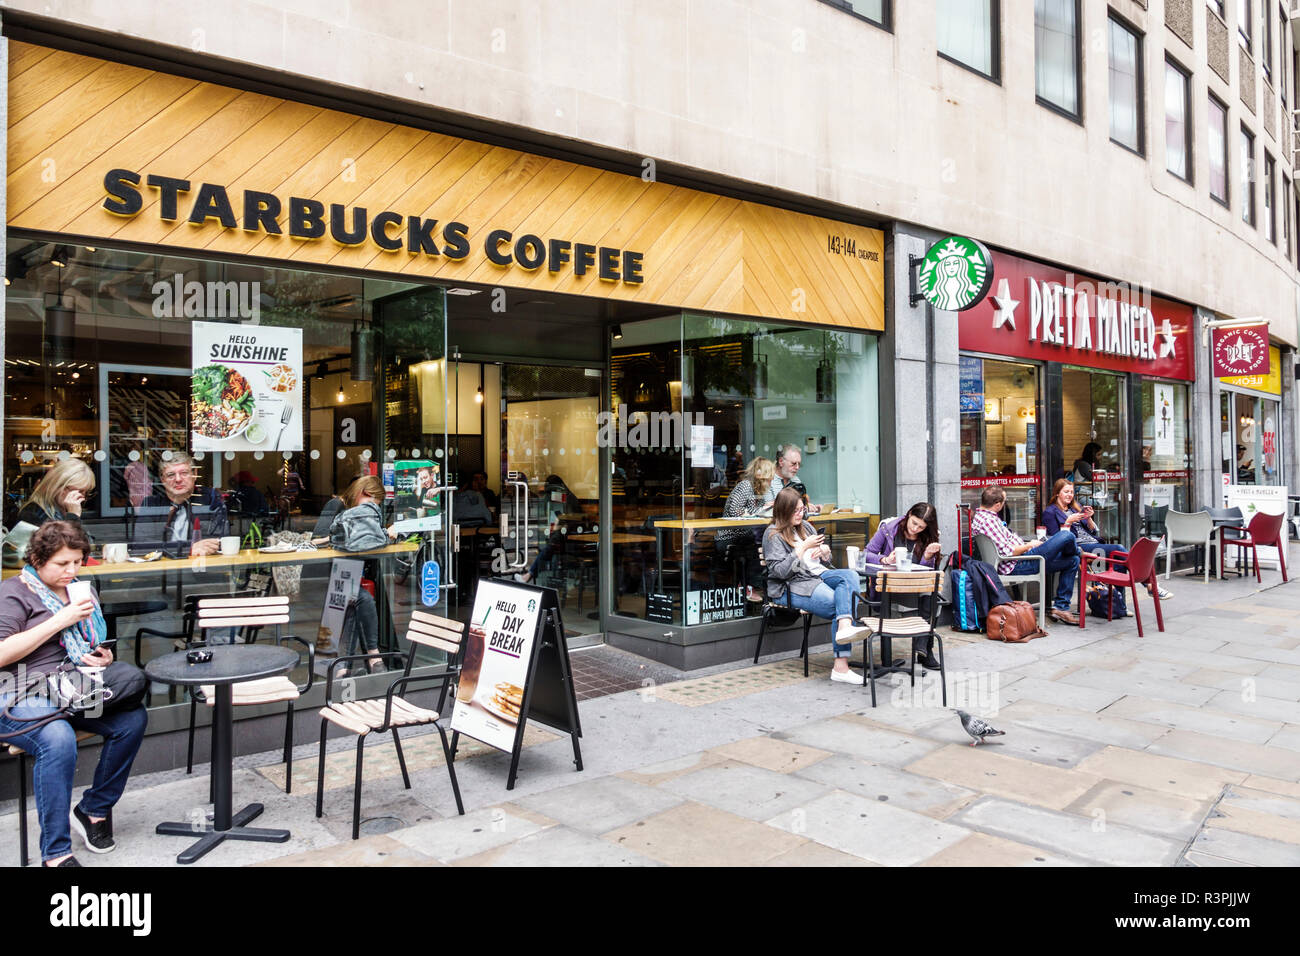 City of London England,United Kingdom UK,Great Britain British,Starbucks Coffee,American coffee house chain,cafe,posti a sedere sul marciapiede,esterno,tavoli,adulti Foto Stock